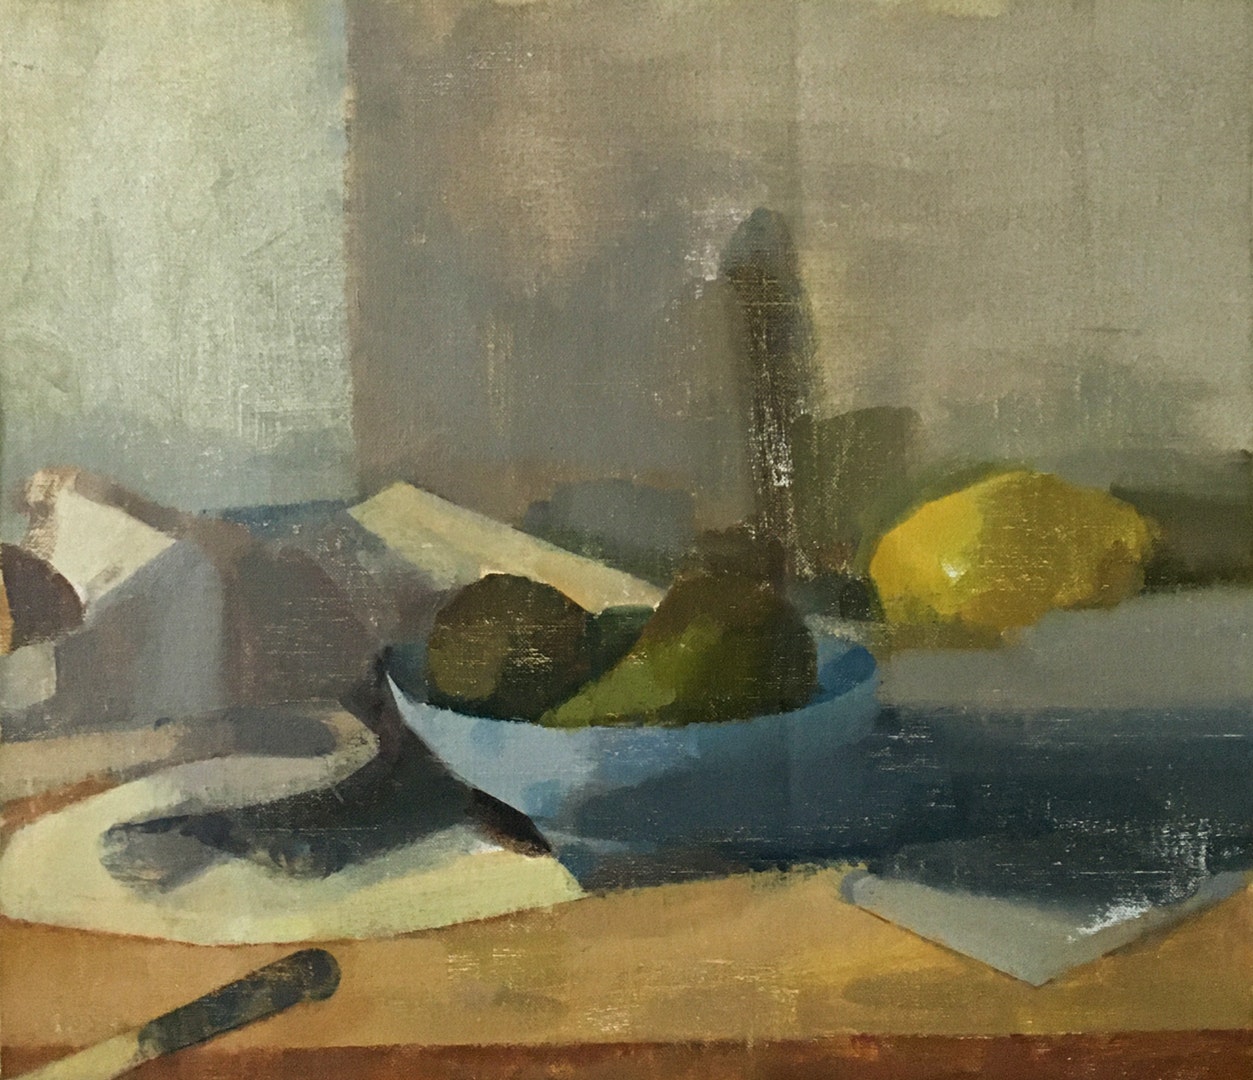 'The still life study with a bowl and a knife', Agata Smolska, Oil on linen, 35 x 40 cm